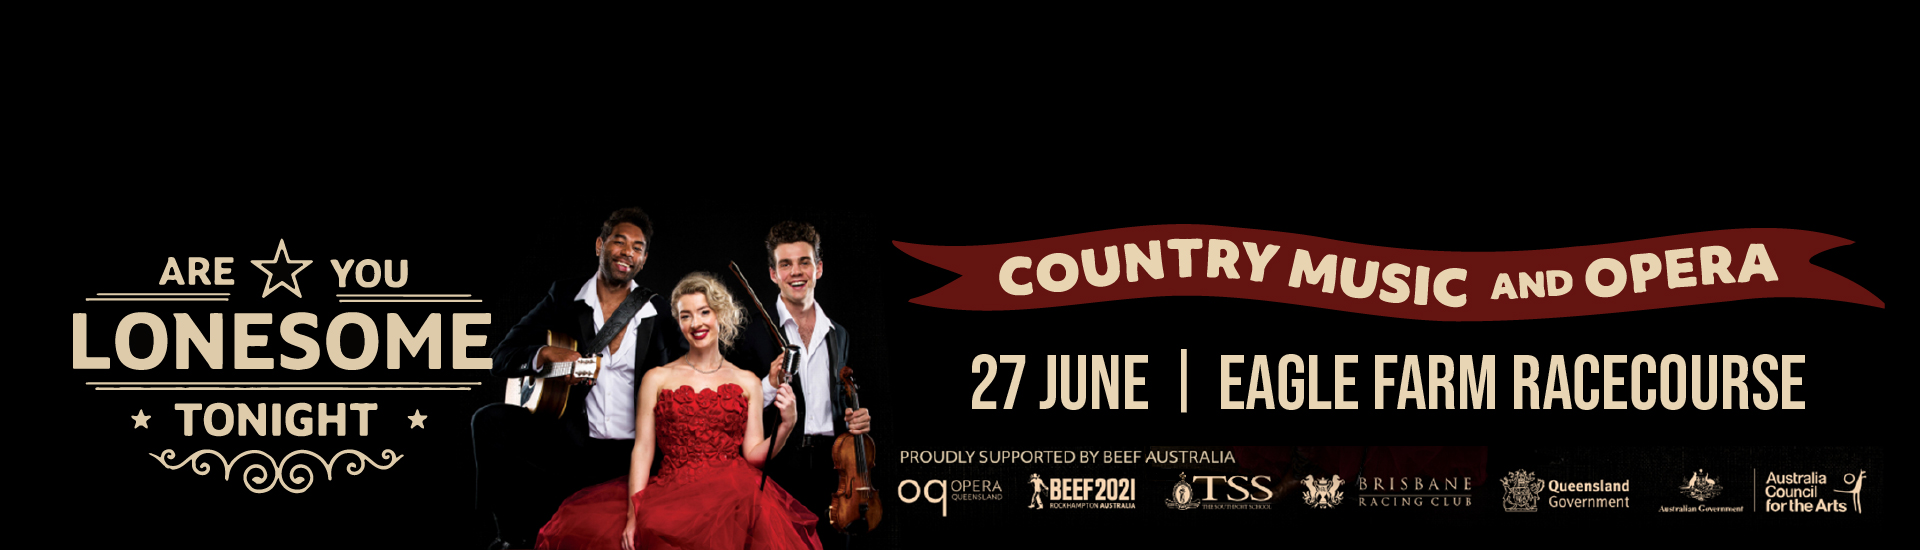 Country-Opera_Webpage-Banner2_1920x550 | Brisbane Racing Club